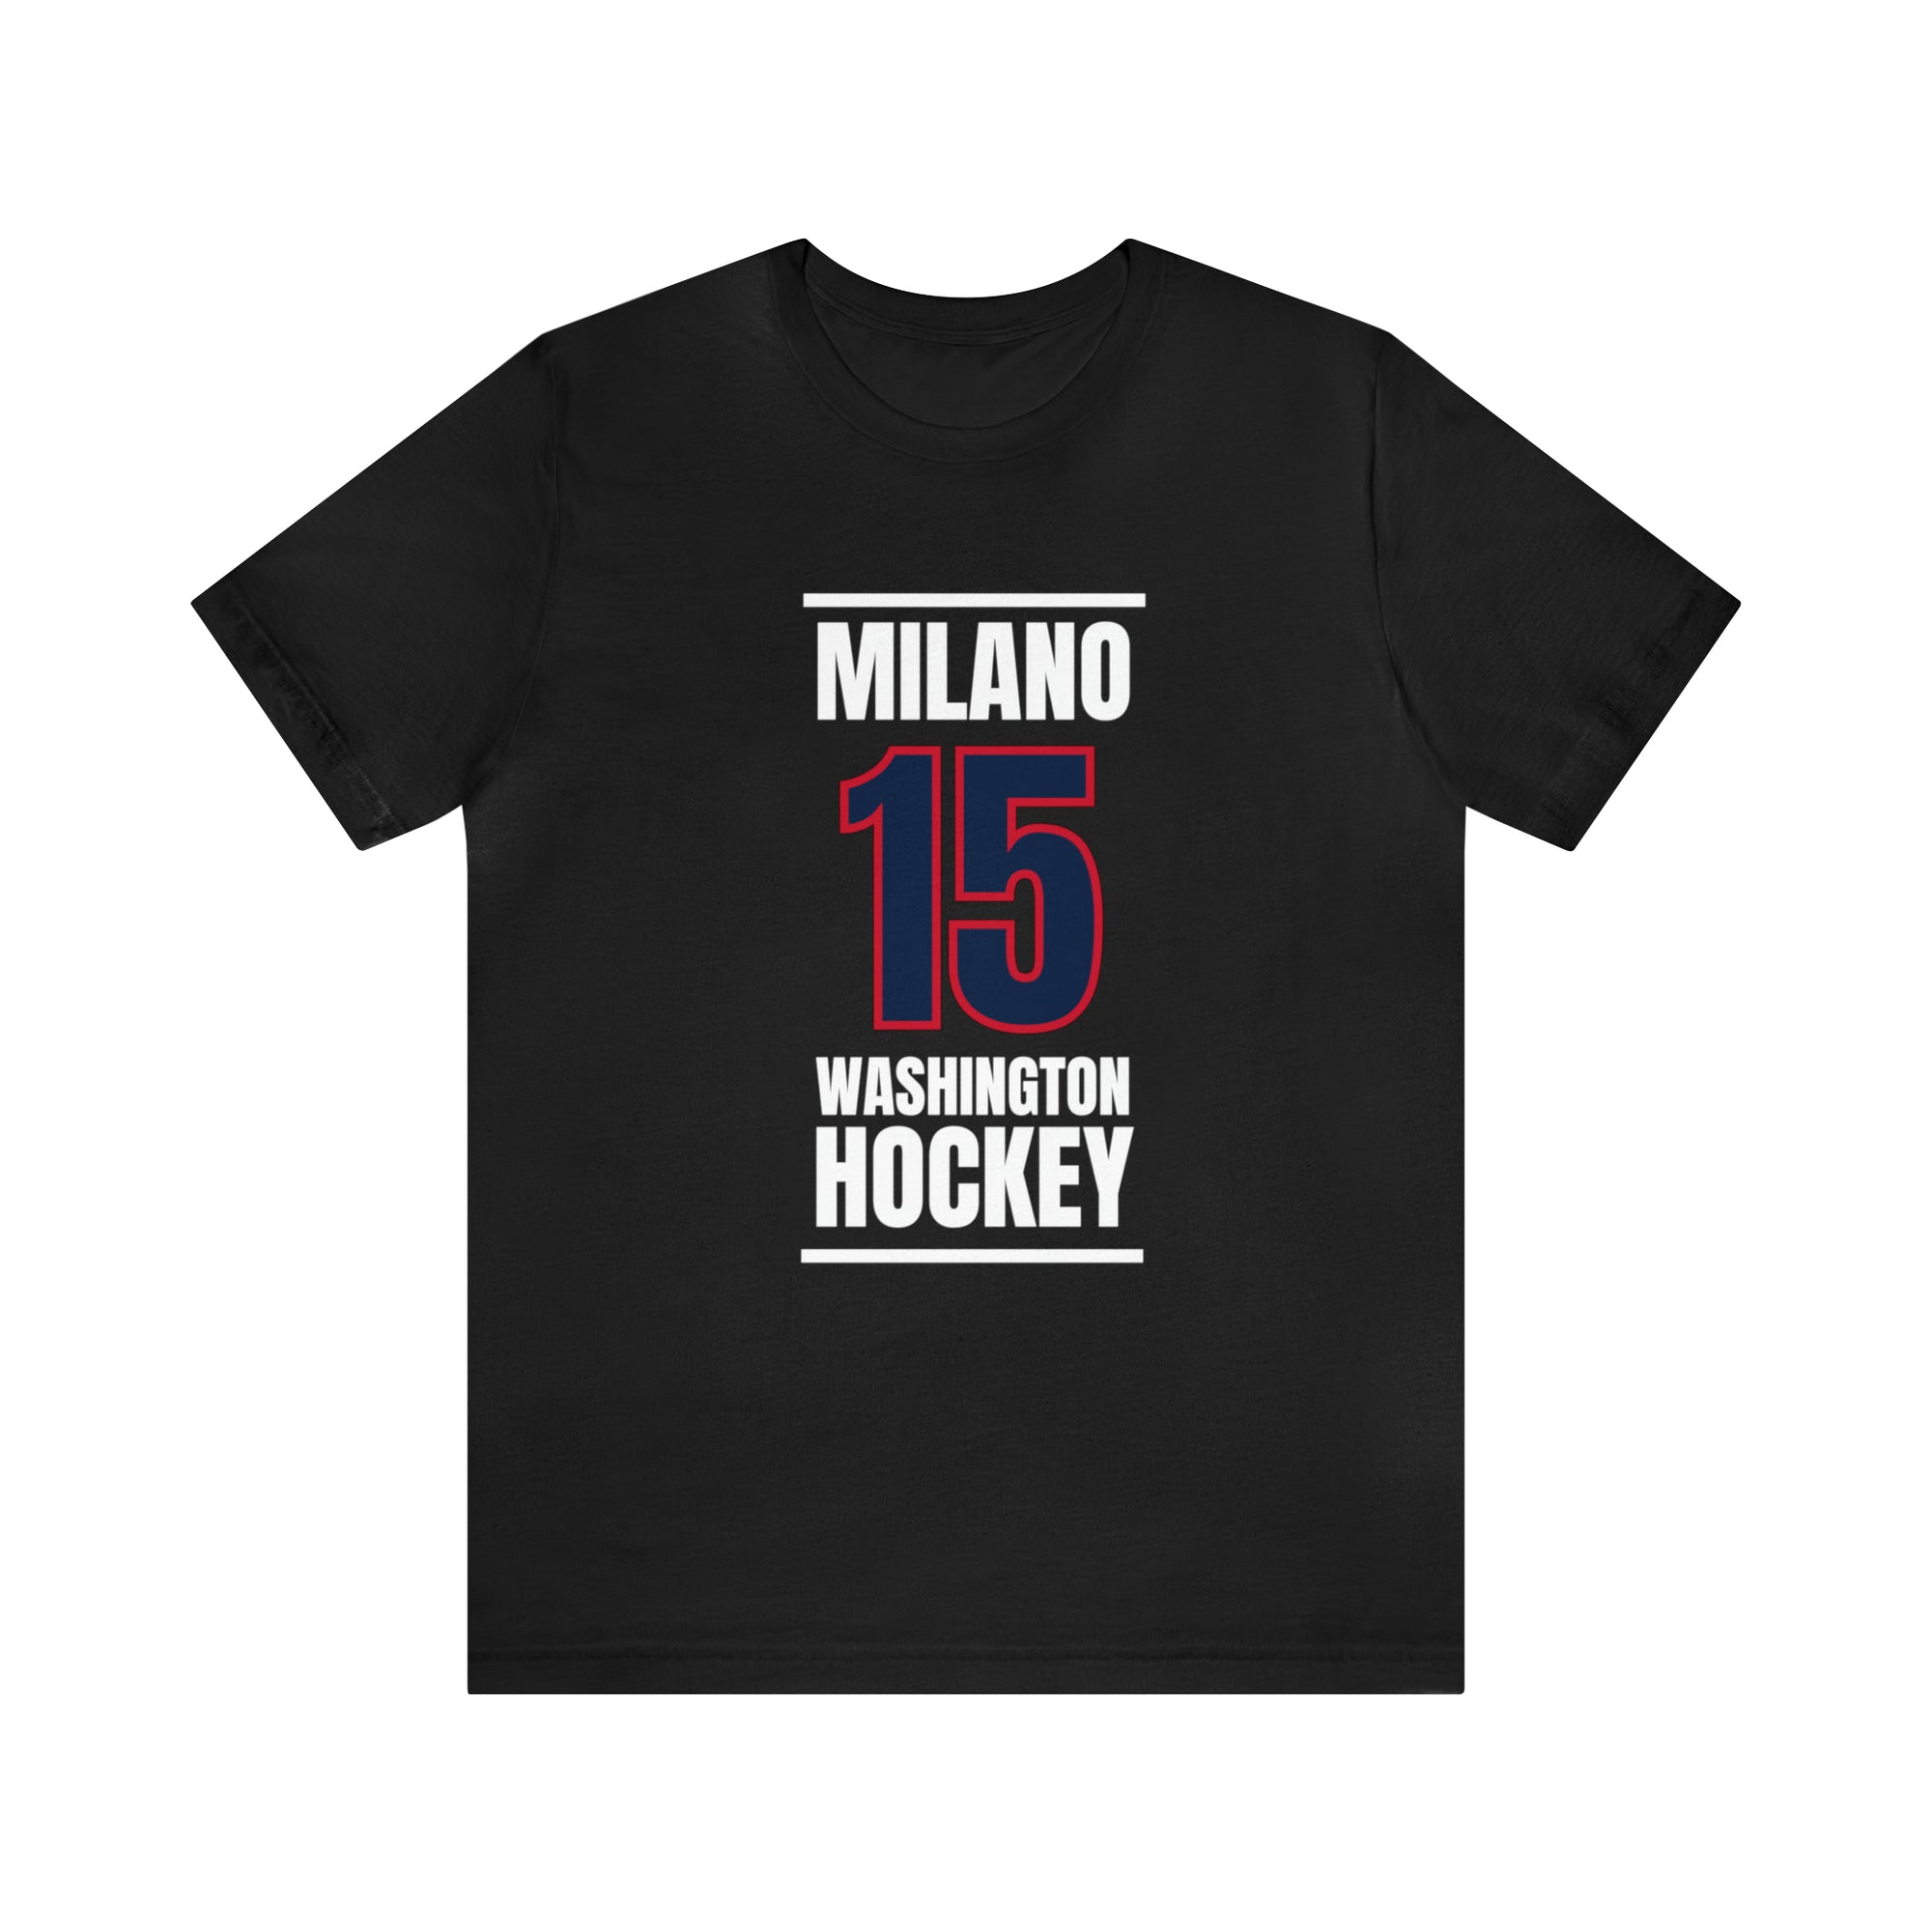 Milano 15 Washington Hockey Navy Vertical Design Unisex T-Shirt